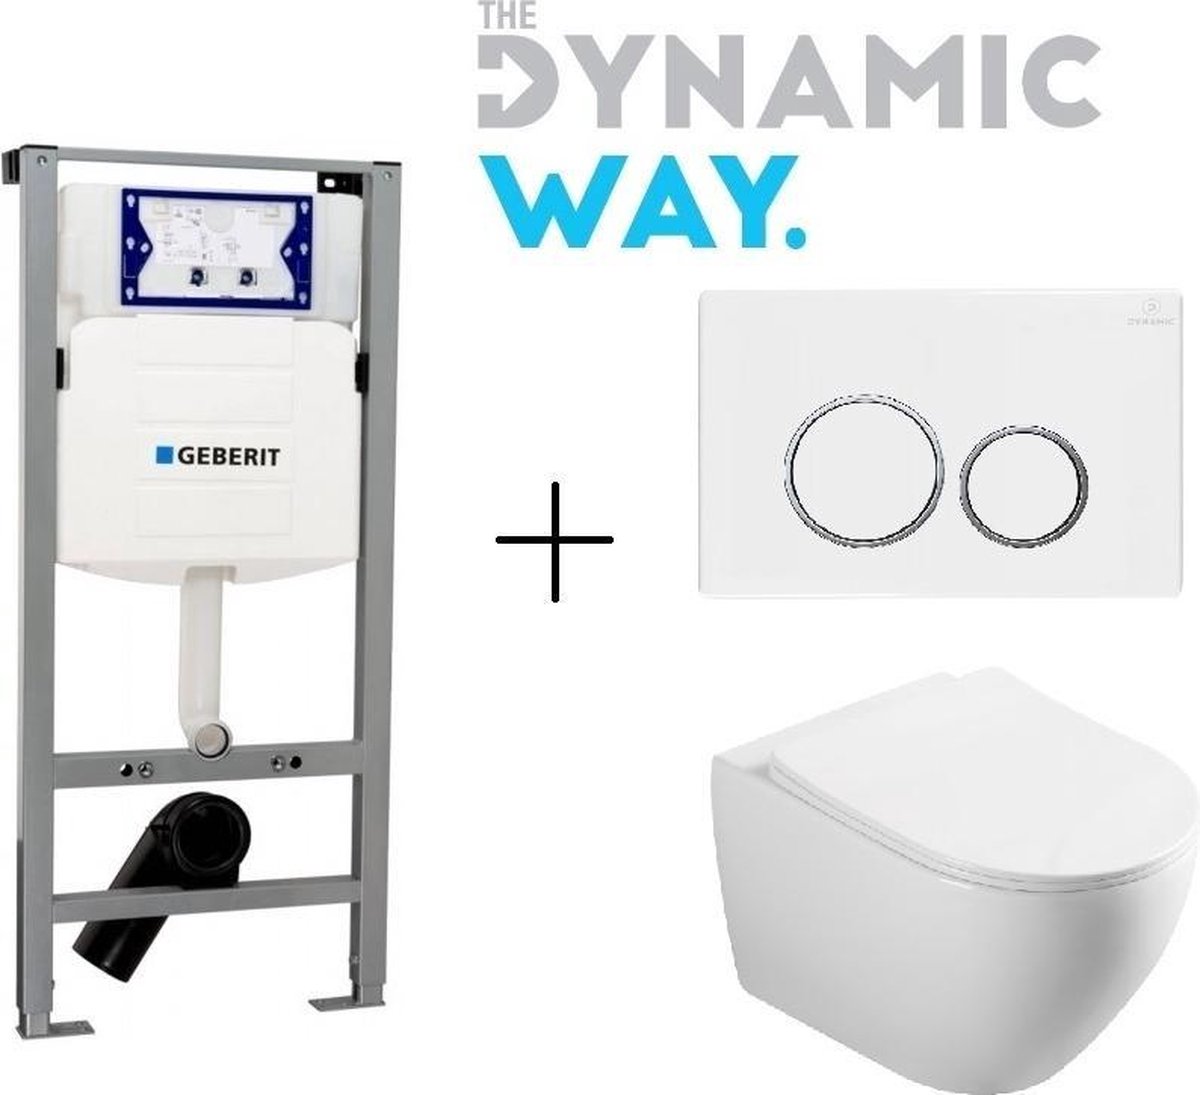 Dynamic Way UP320 Toiletset - Wandcloset hangend - Inbouwreservoir - Bedieningsplaat rond wit